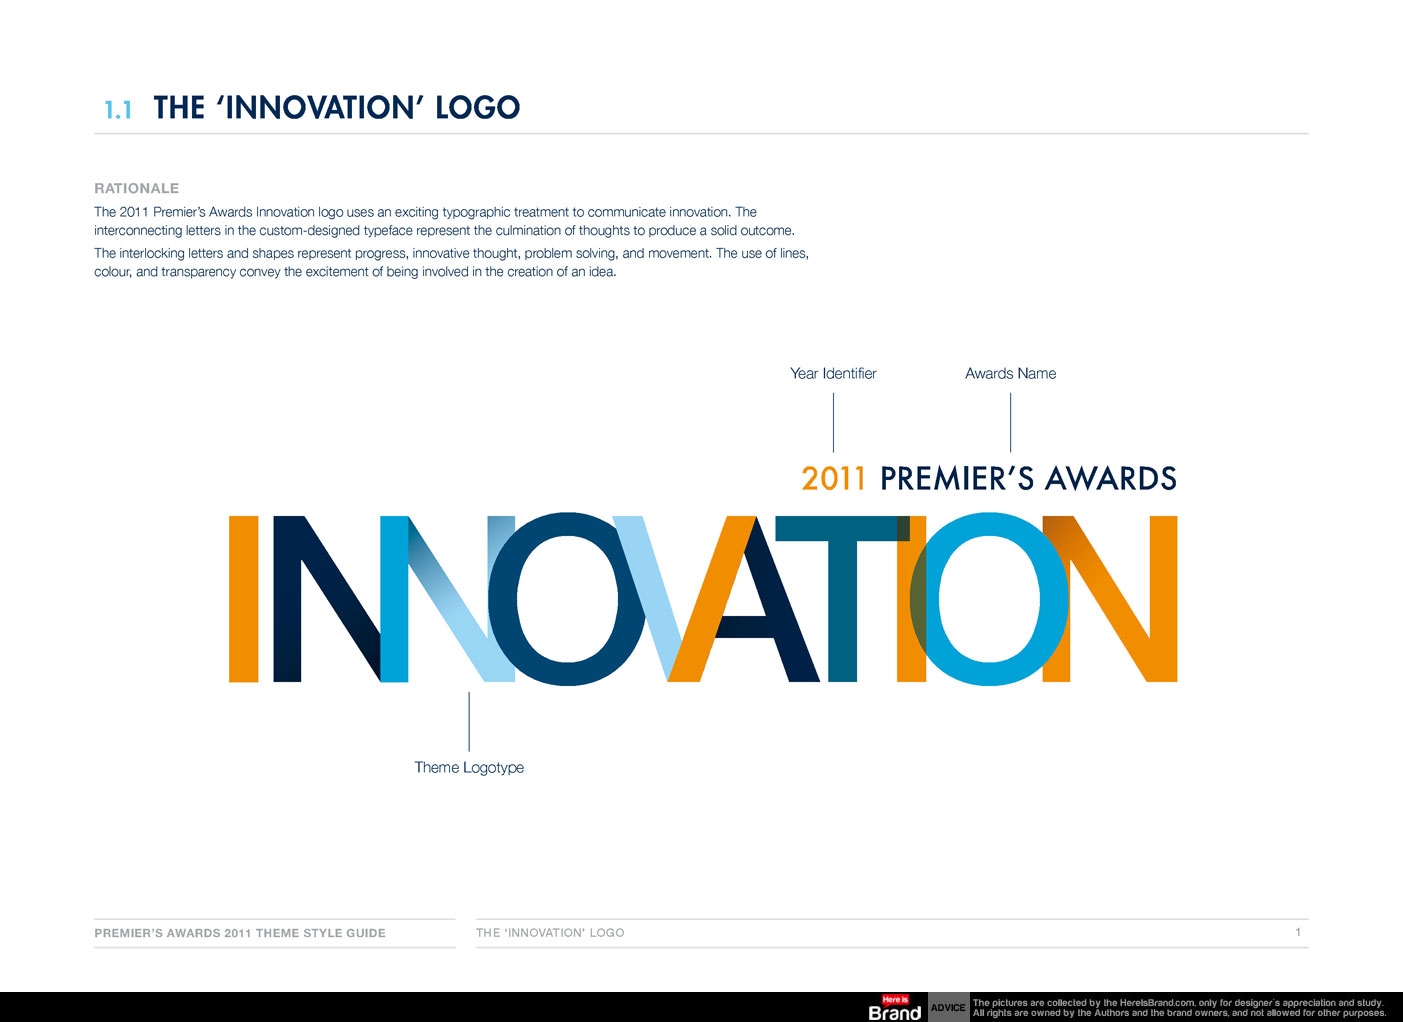 2011 Premier's Awards Innovation theme logo usage